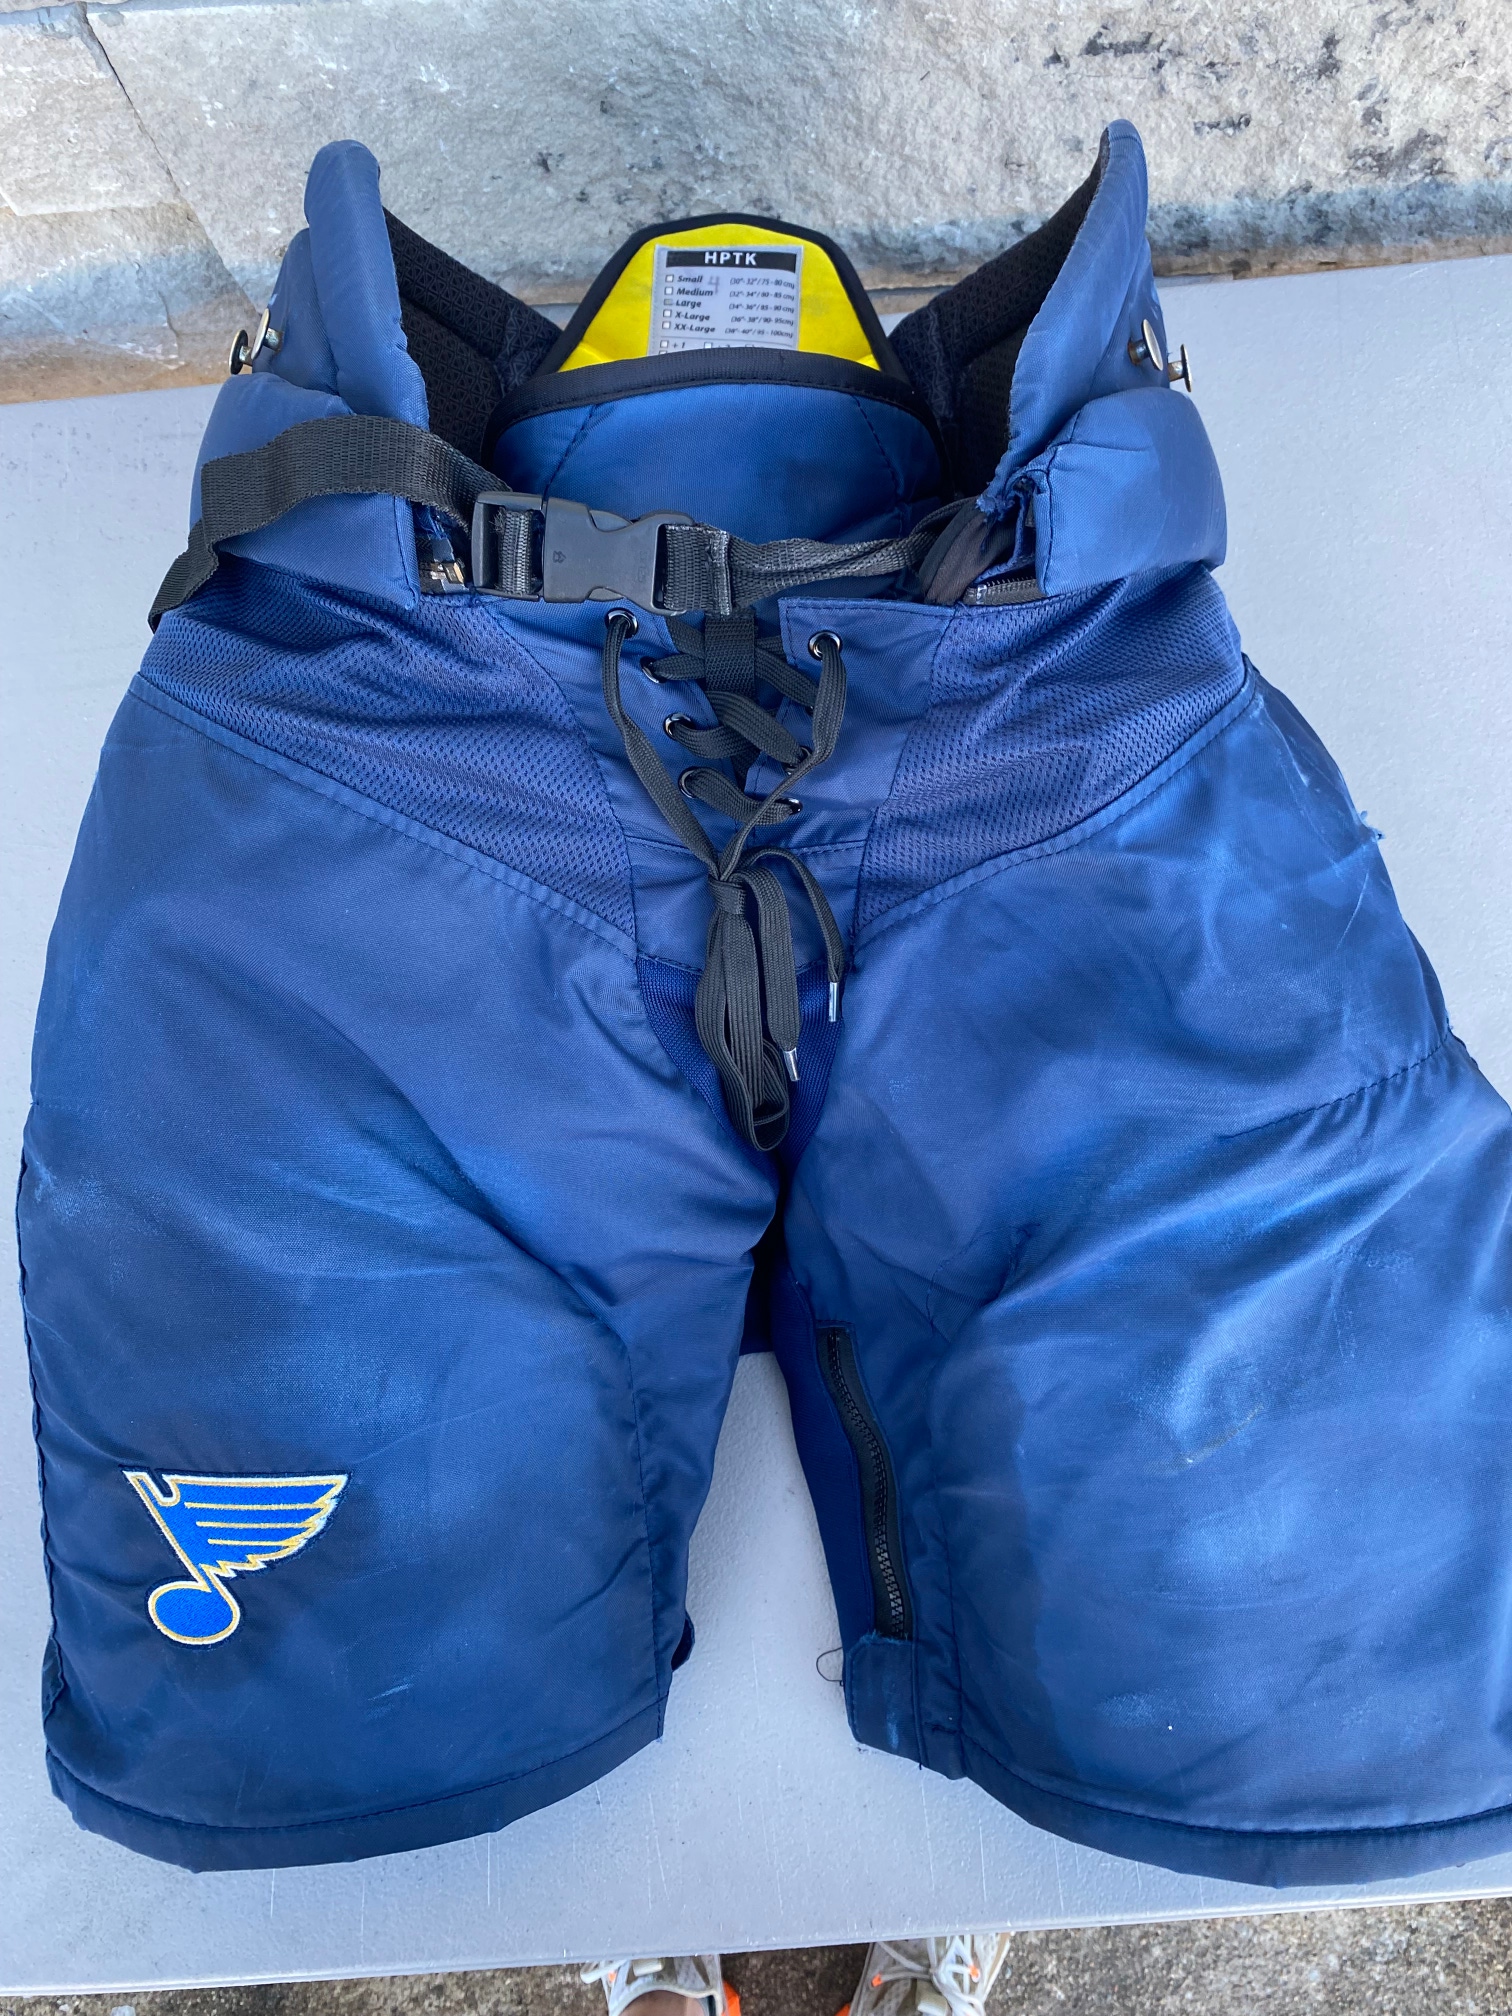 AJ Sports  Connor Bedard Autographed Navy Blue CCM Hockey Pants